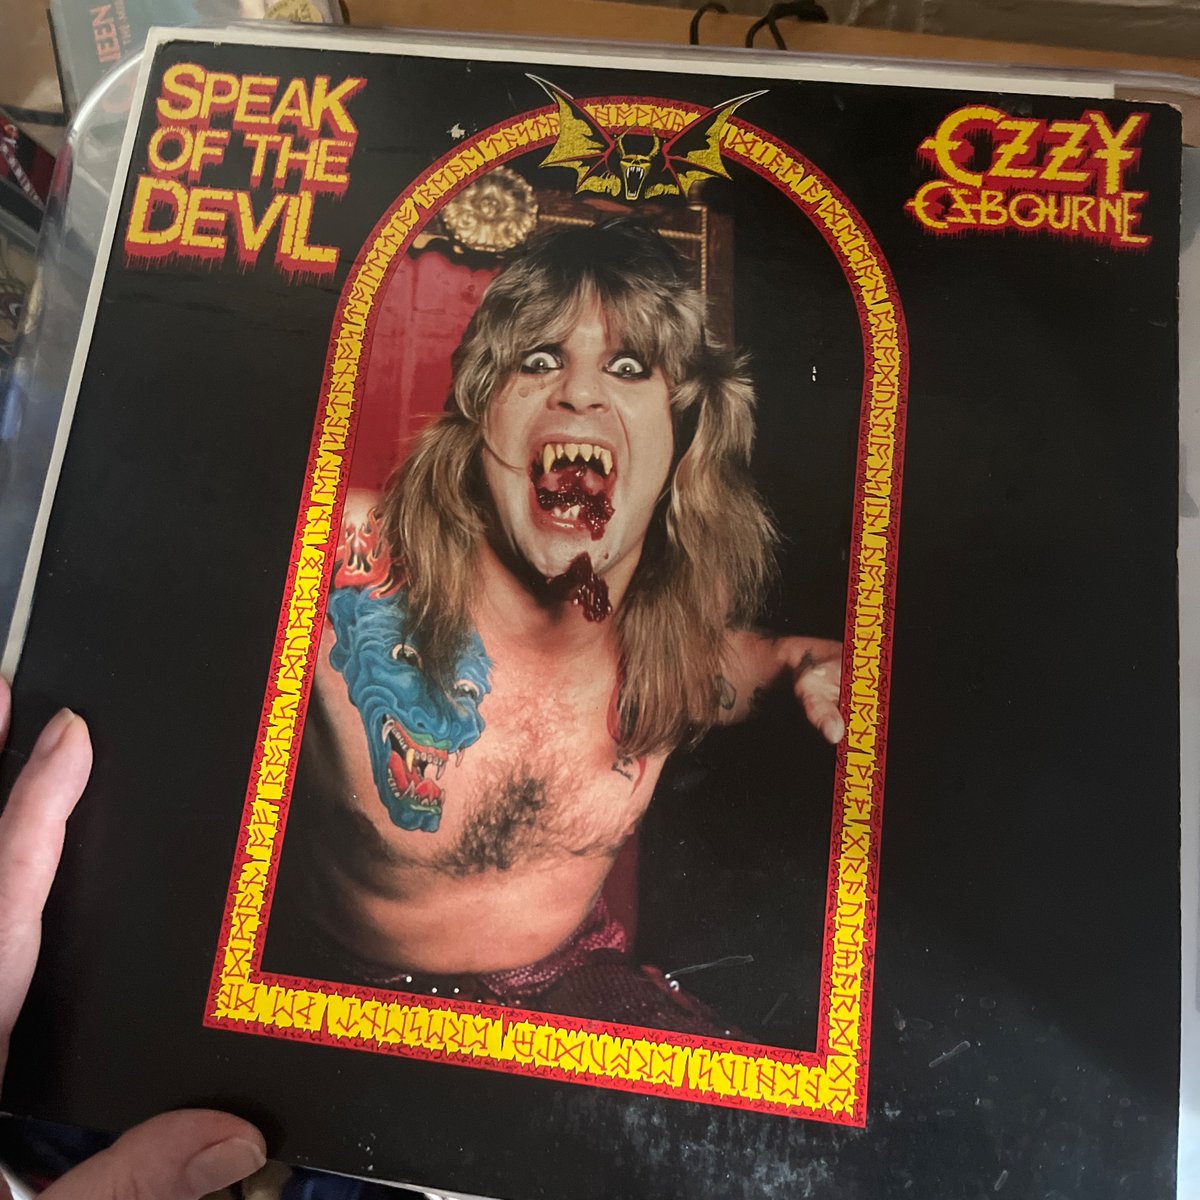 Ozzy Osbourne - Speak Of The Devil ✌🏻🩷💕
#NowPlaying #HeavyMetal #80smusic #albumsyoumusthear #vinylrecords #vinyl